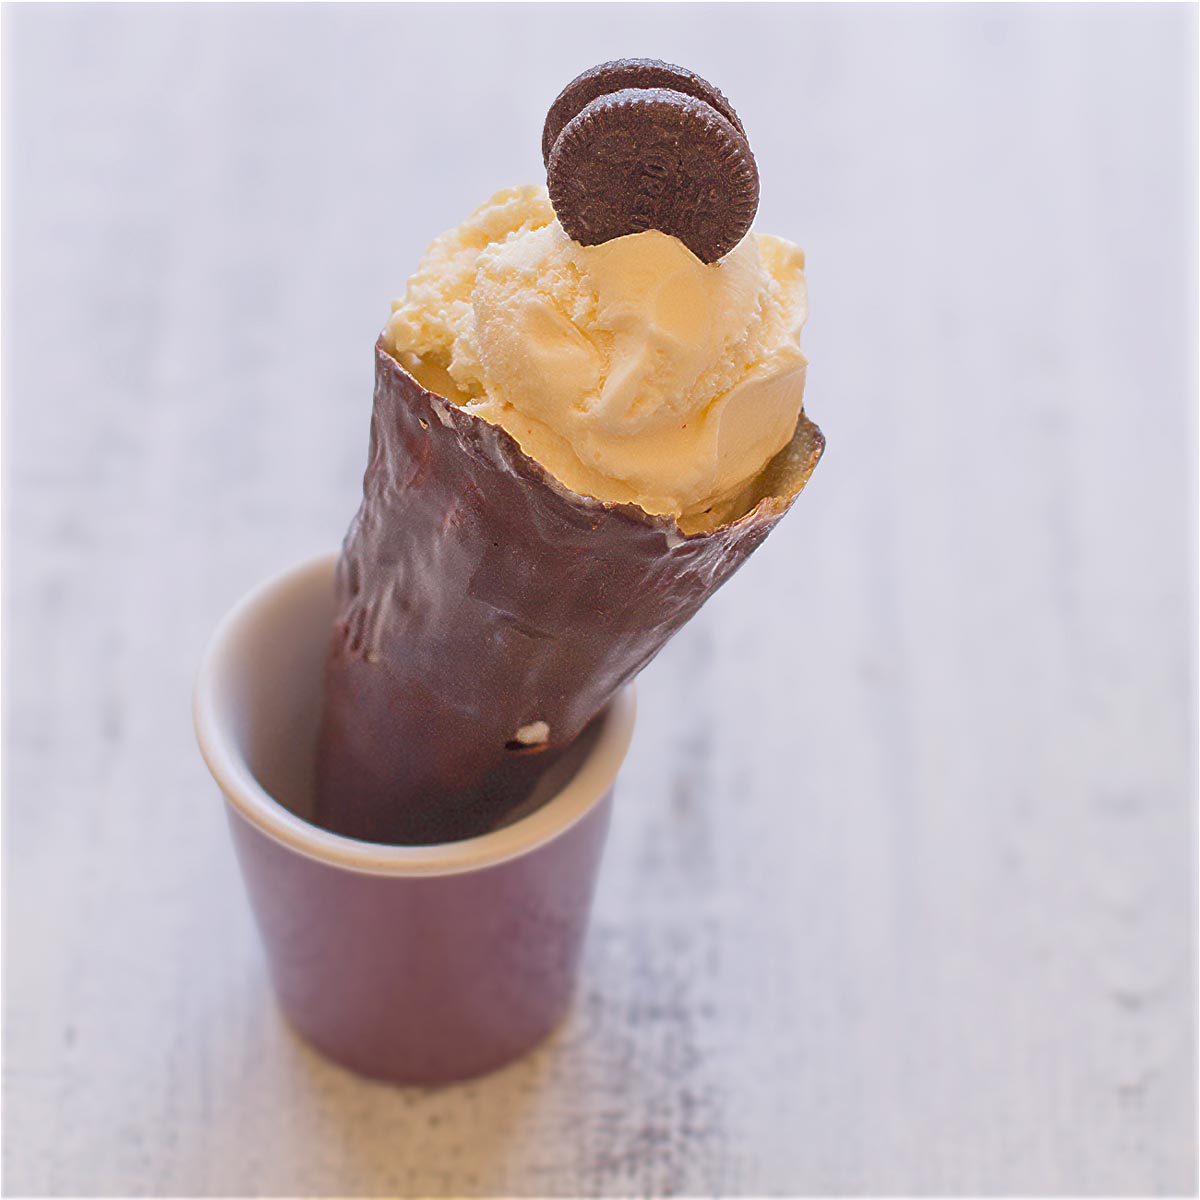 chocolate cones with vanilla ice cream